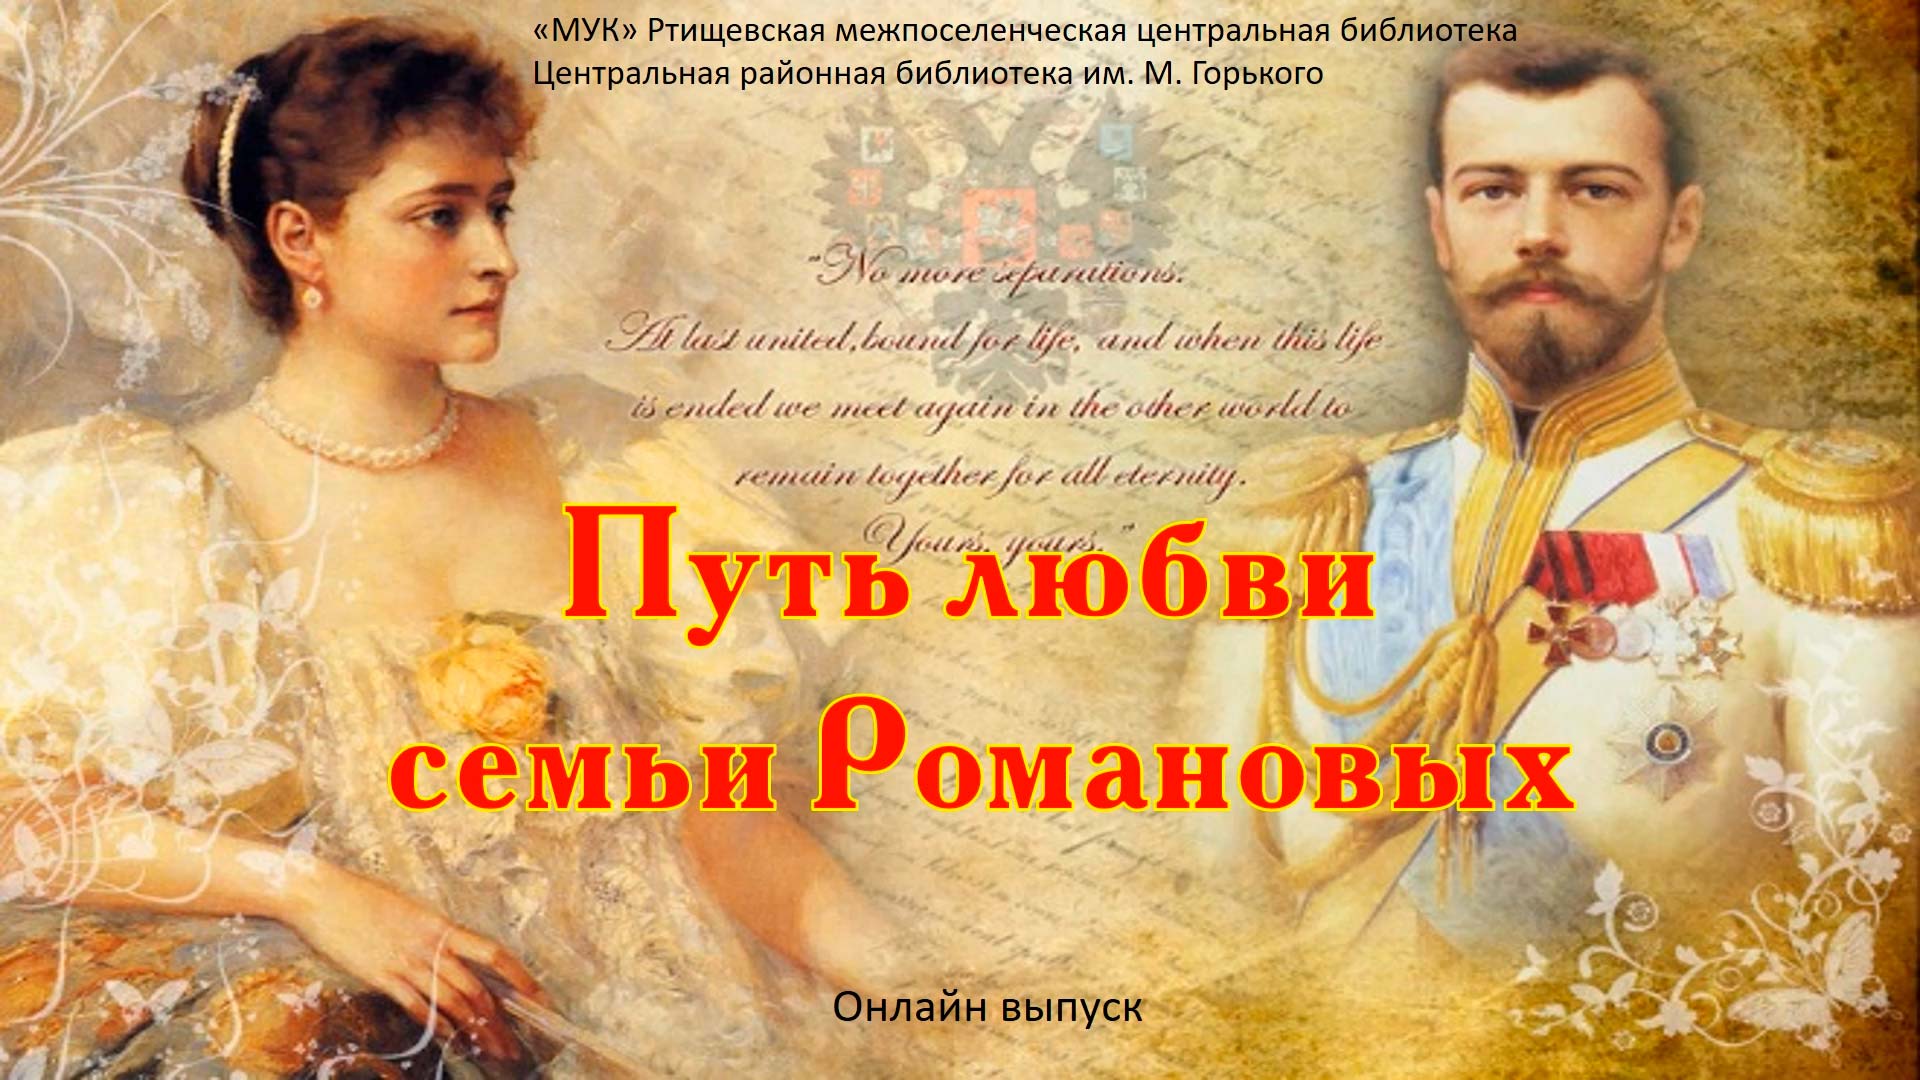 Император Николай Александрович и Императрица Александра Федоровна